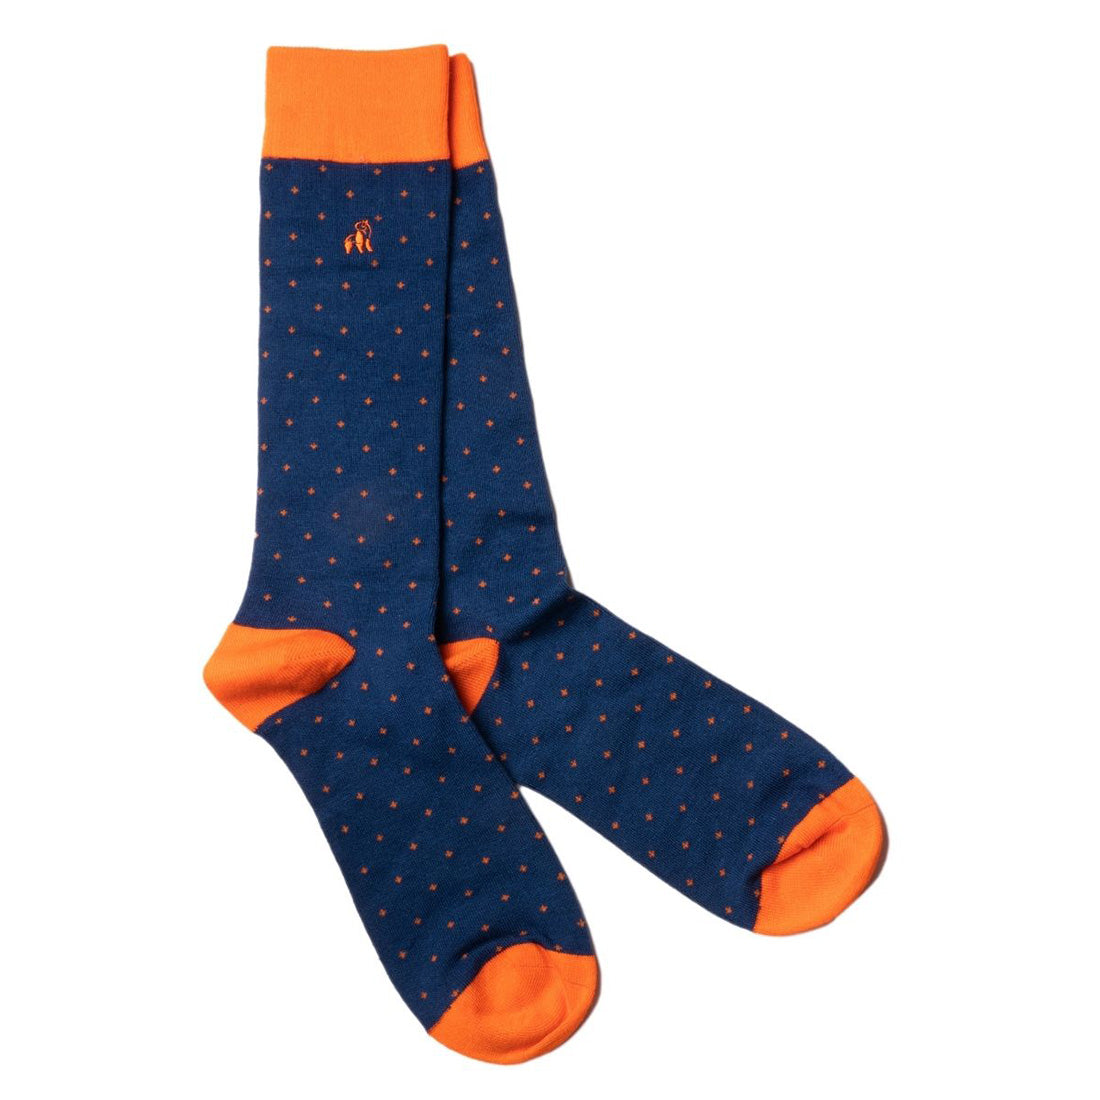 socks-spotted-orange-bamboo-socks-comfort-cuff-1_f0ceebe1-bd1b-4925-905e-e61c7f8e64b9.jpg